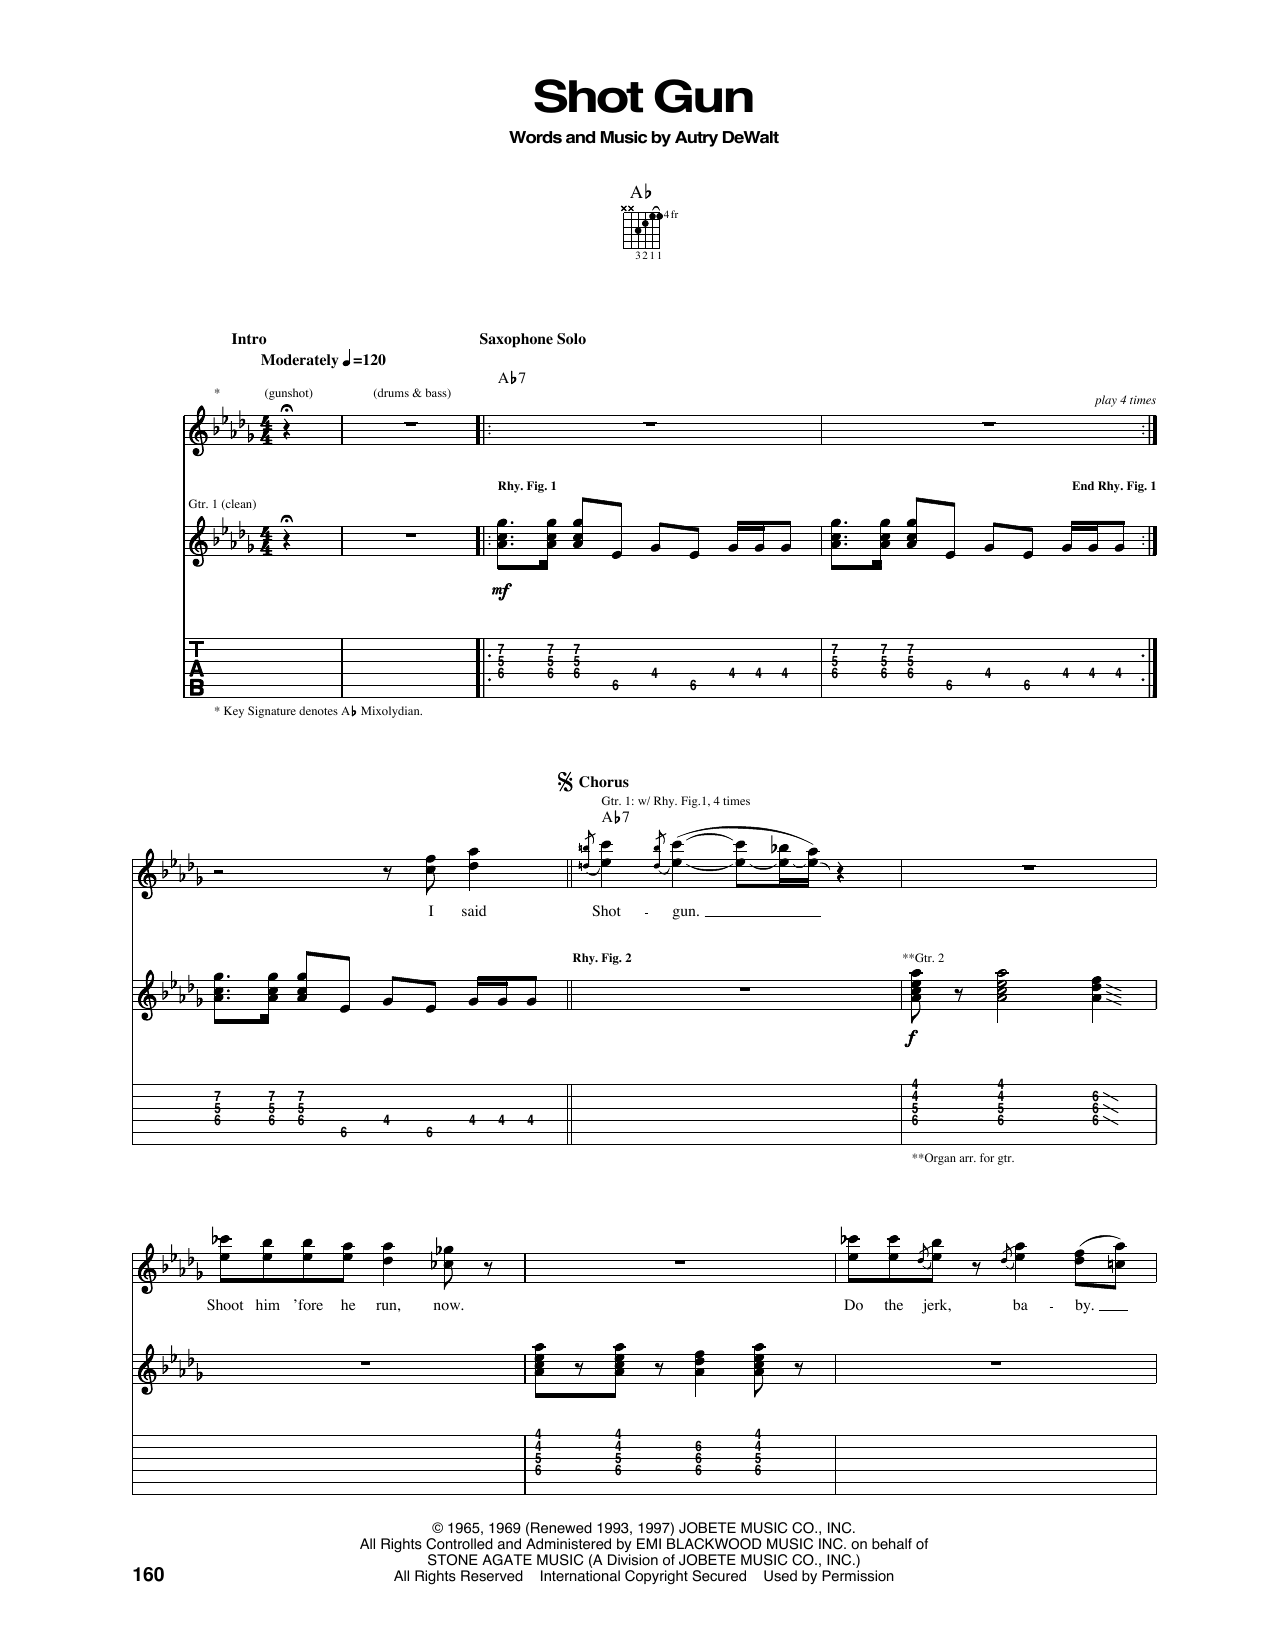 Vanilla Fudge Shotgun Sheet Music Notes & Chords for Guitar Tab - Download or Print PDF